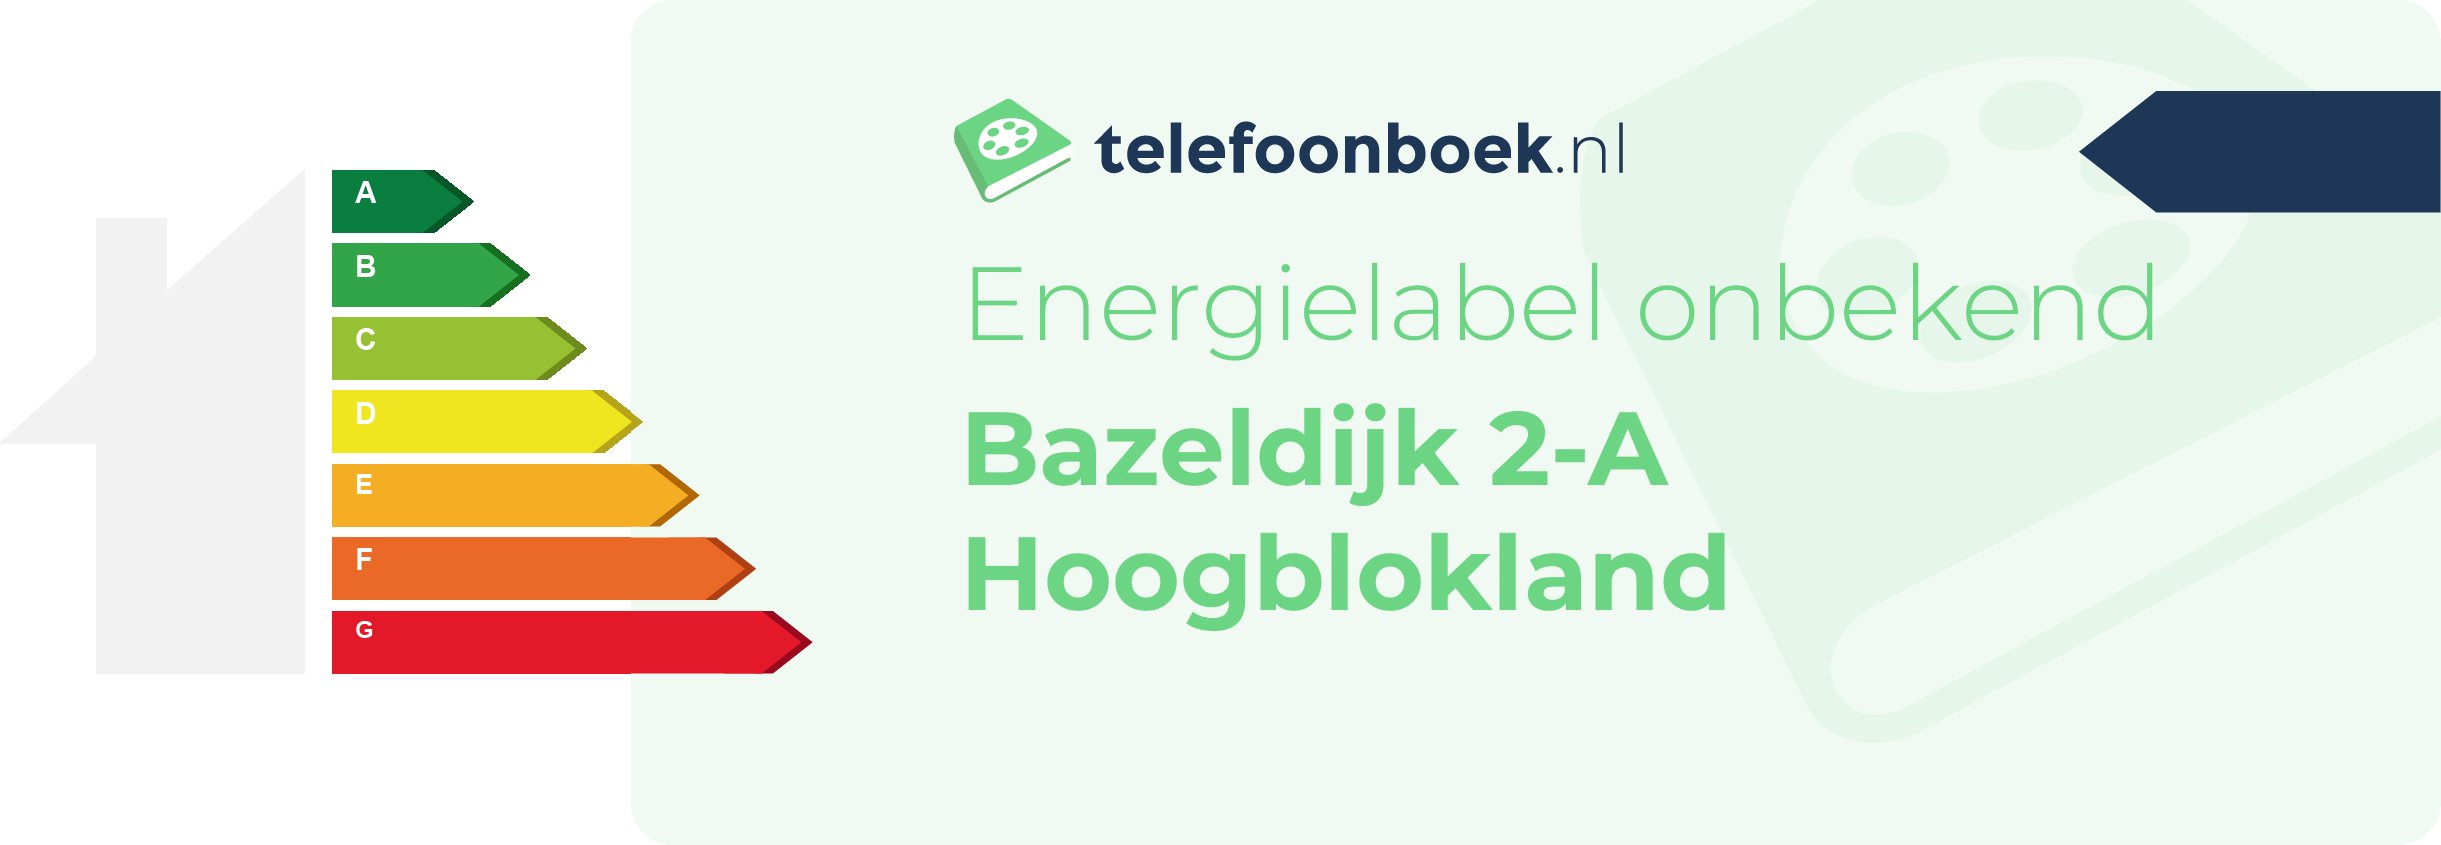 Energielabel Bazeldijk 2-A Hoogblokland